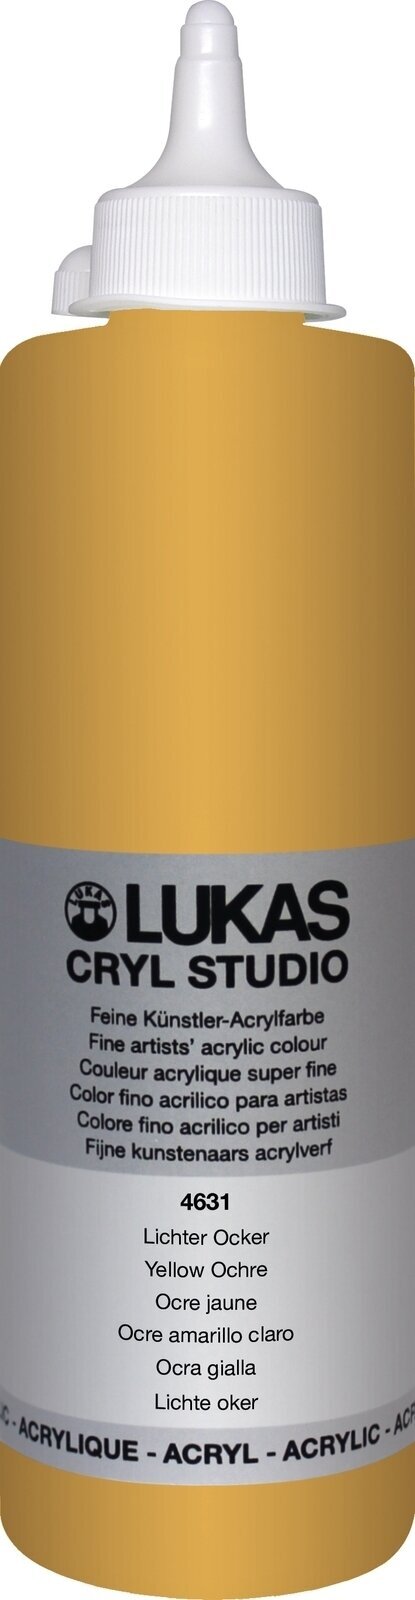 Acrylfarbe Lukas Cryl Studio Acrylfarbe 500 ml Yellow Ochre